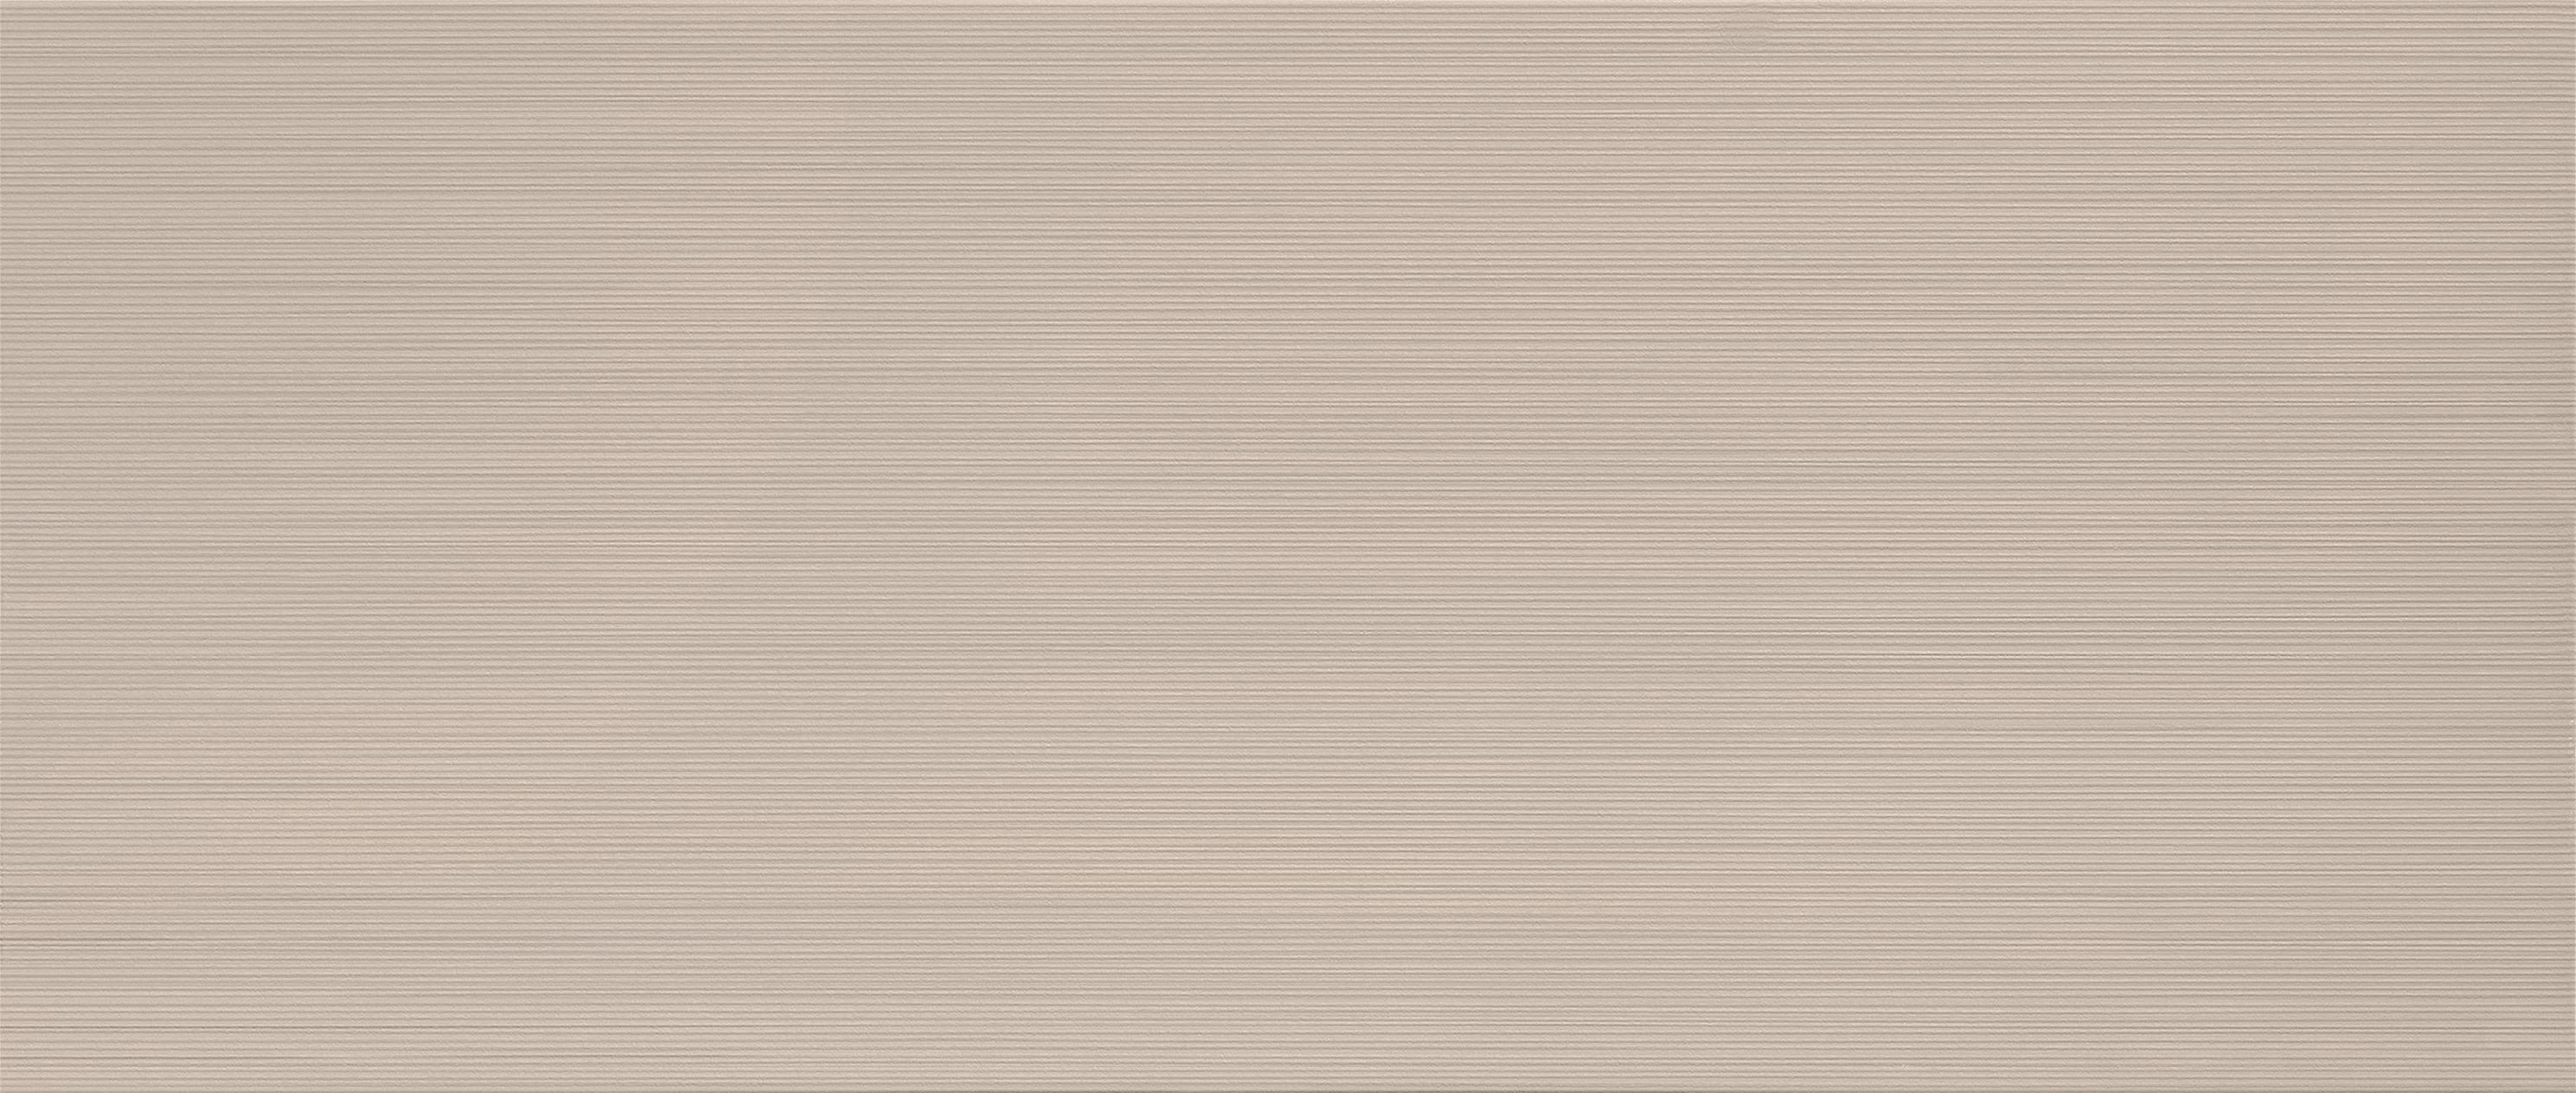 faience-atlas-aplomb-50x120r-1-80m2-paq-canvas-stripes-a6e9-0